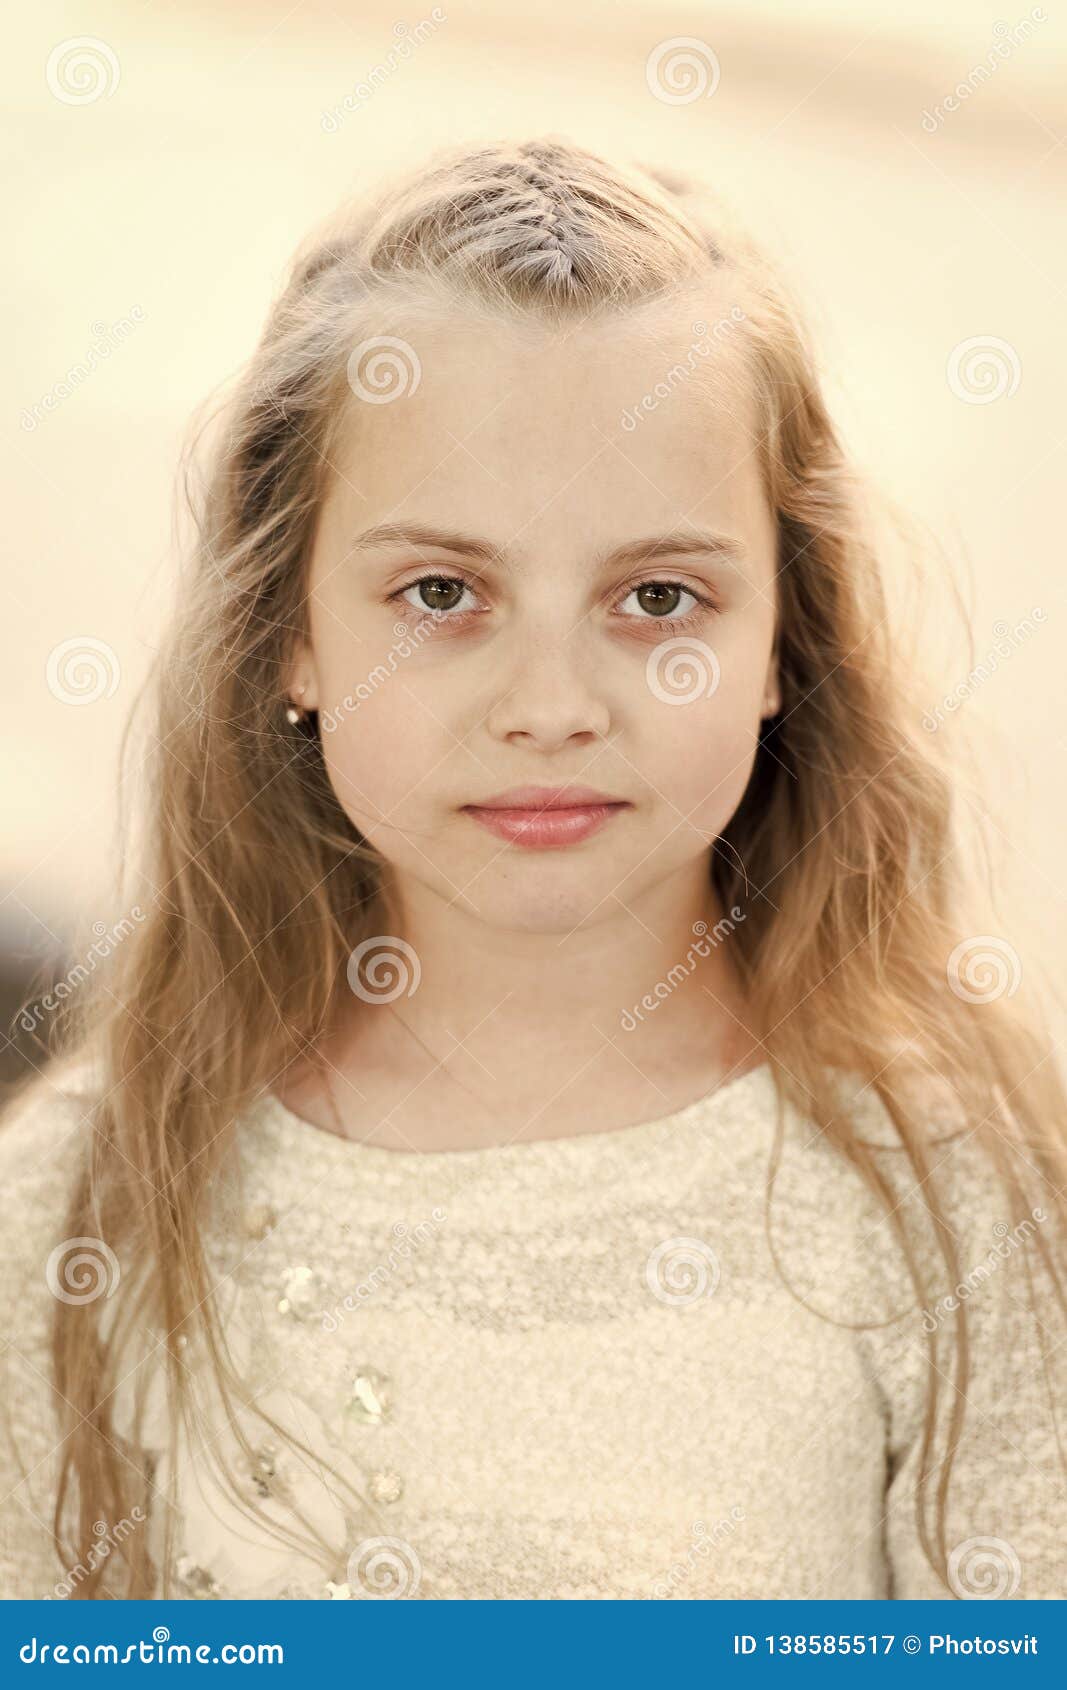 Girl With Long Hair On Calm Face Light Background Kid Girl